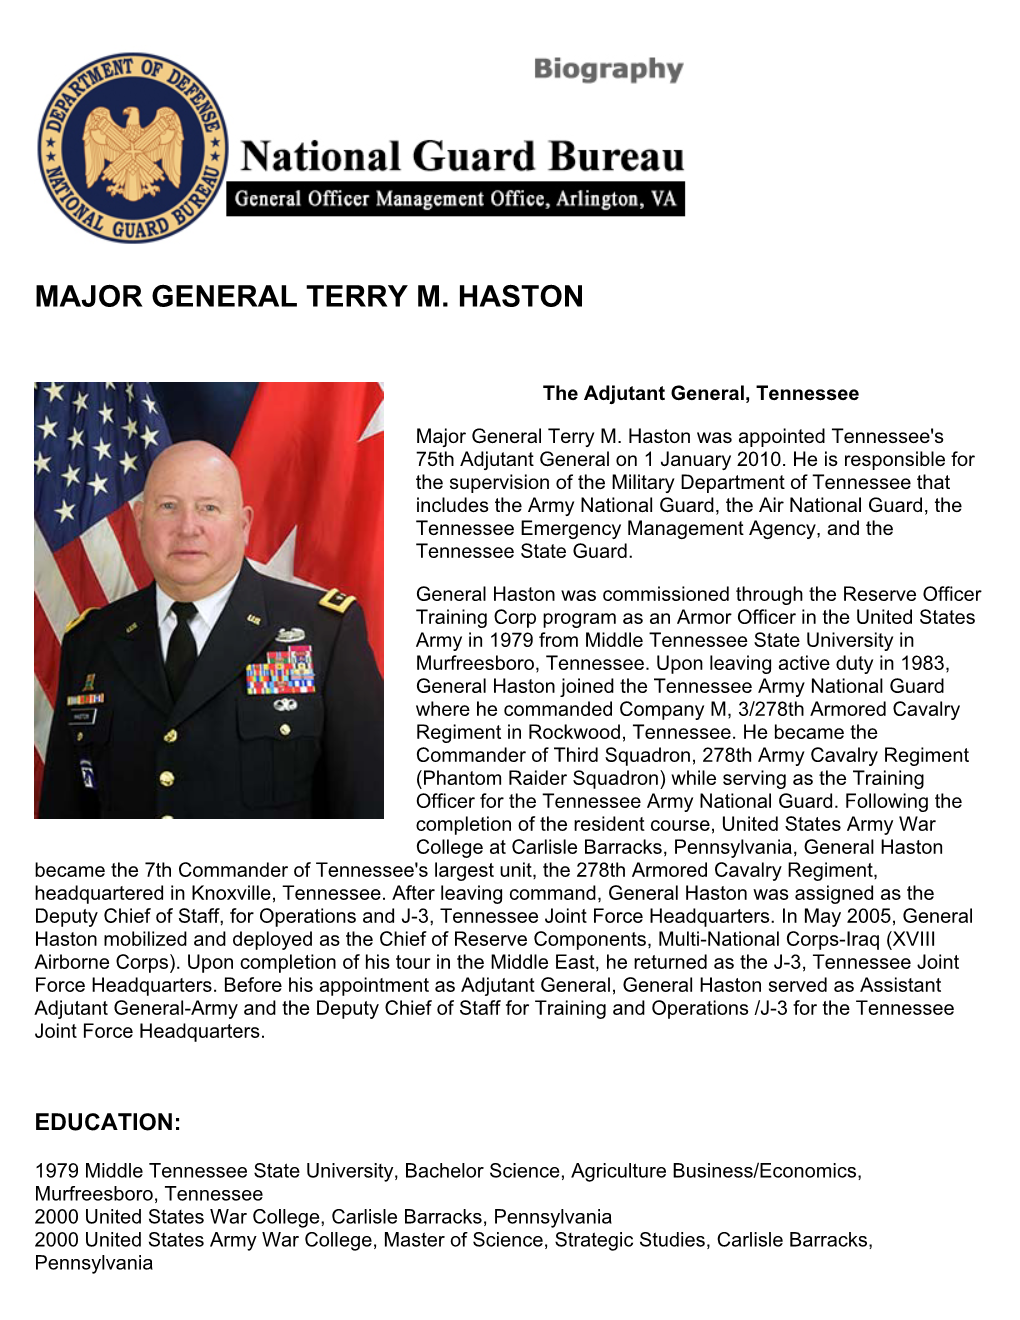 Major General Terry M. Haston